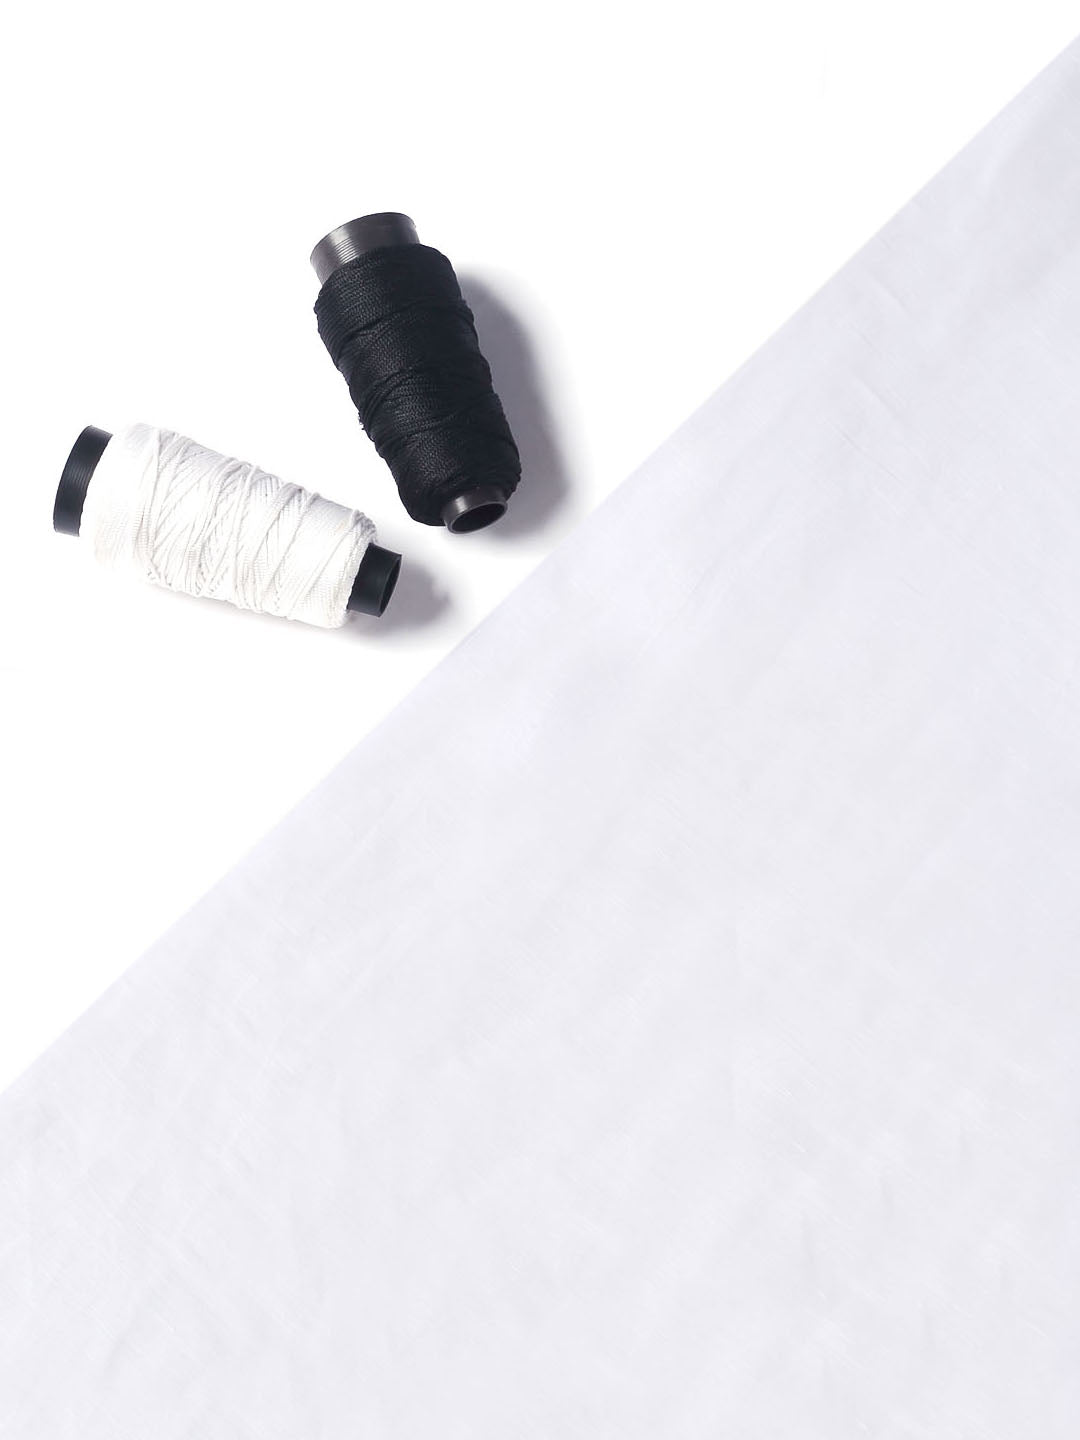 White Linen Satin Fabric